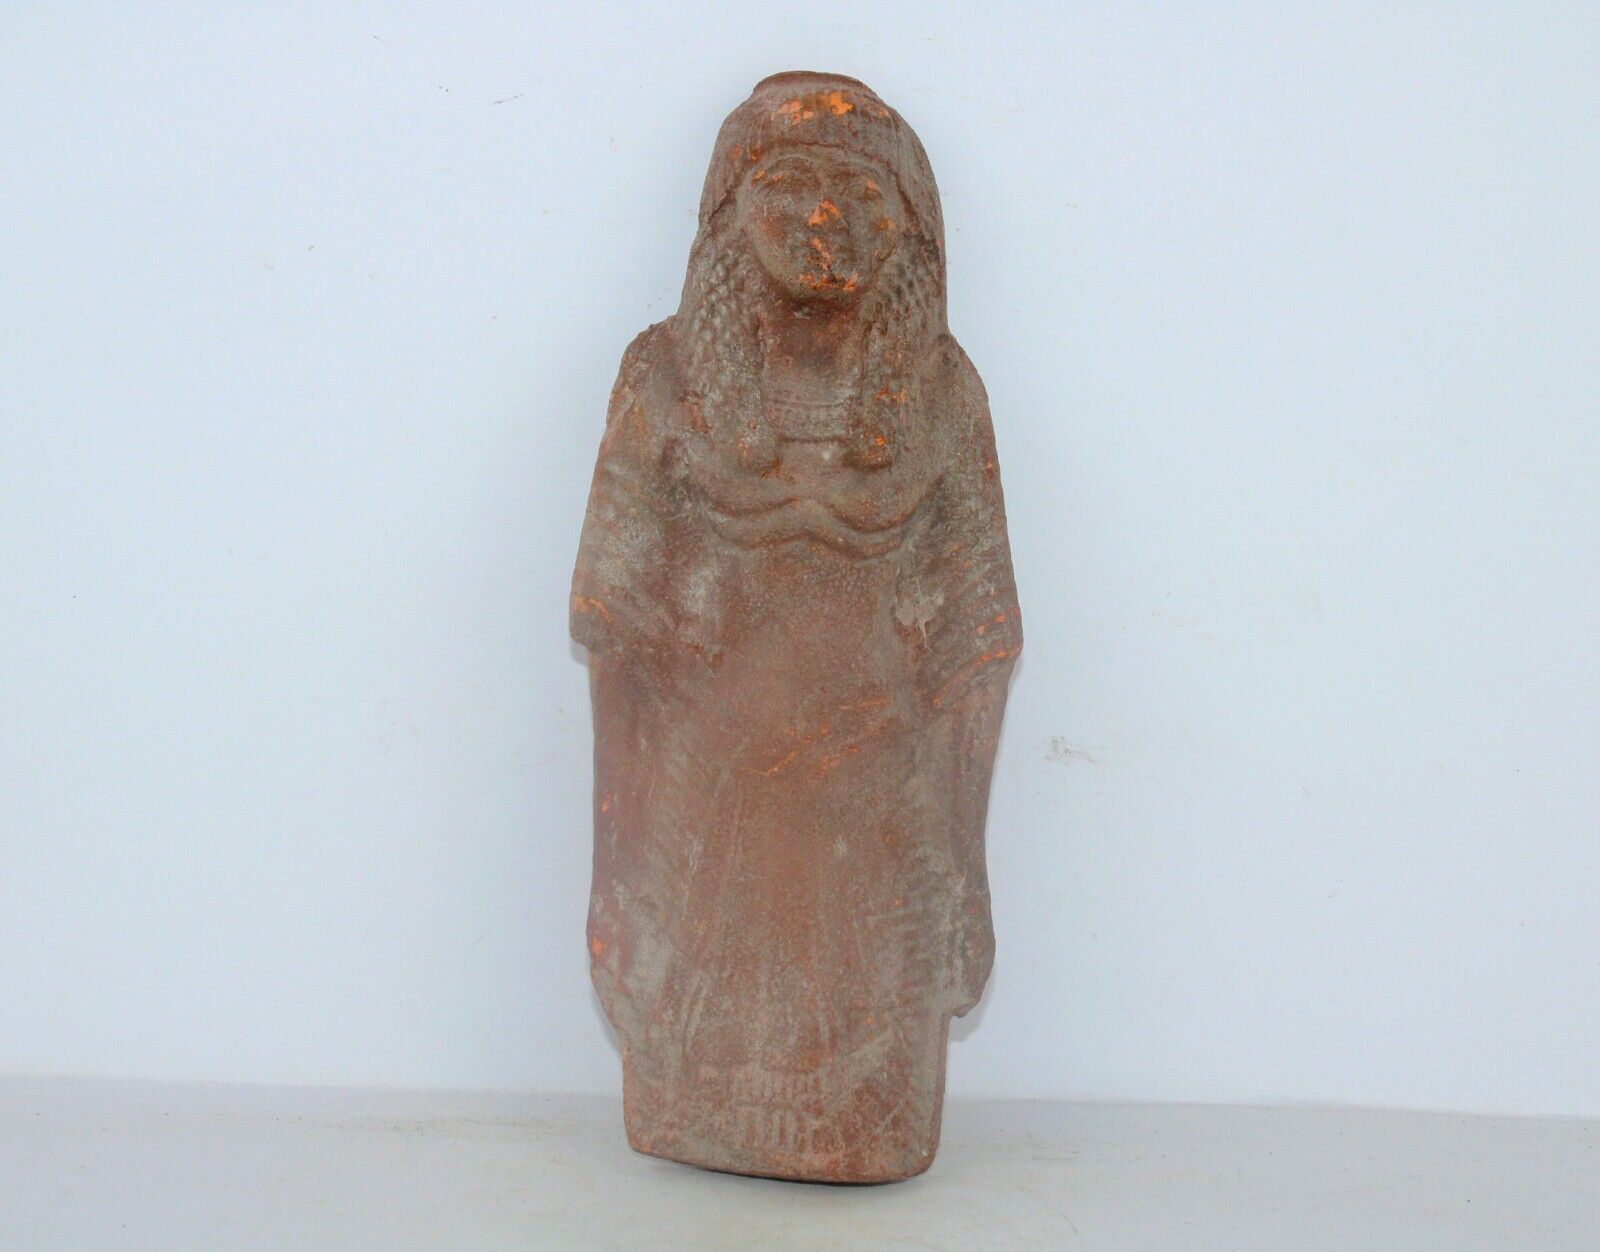 Rare Ancient Statue of Juno Roman Goddess of Love and Marriage Roman Mythology